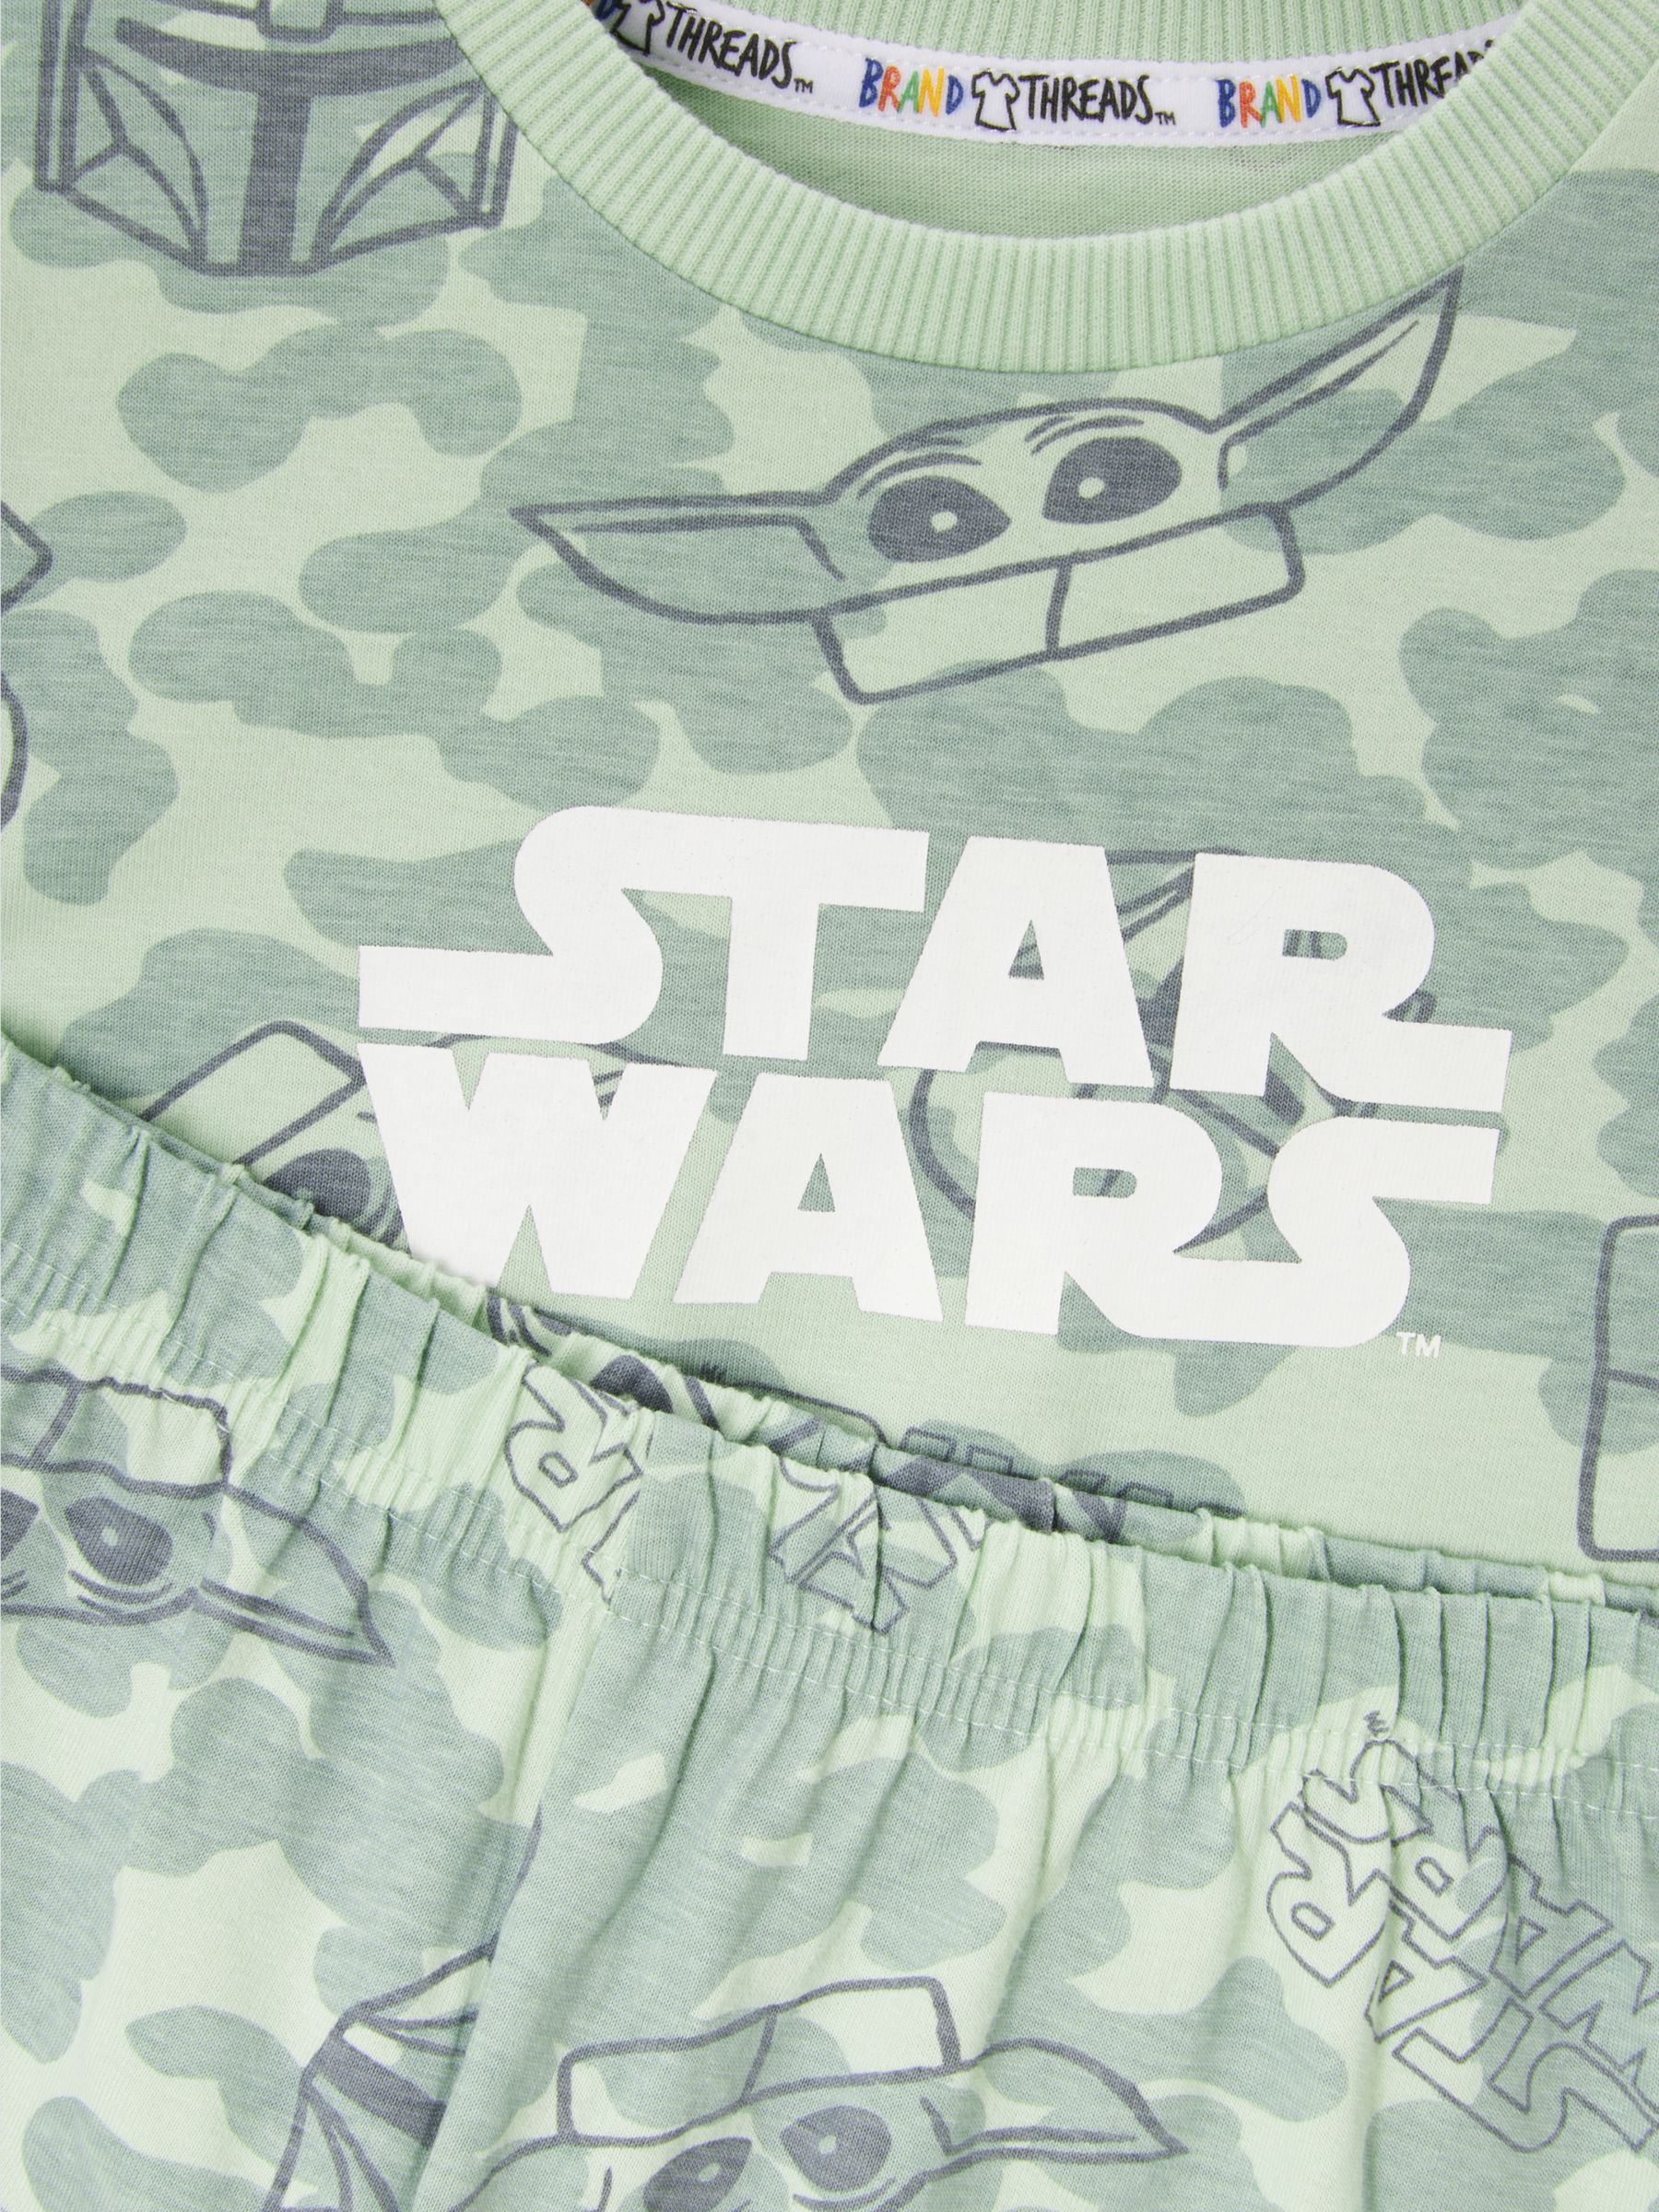 Buy Brand Threads Kids' Star Wars Mandolorian Shorts Pyjamas Set, Green Online at johnlewis.com